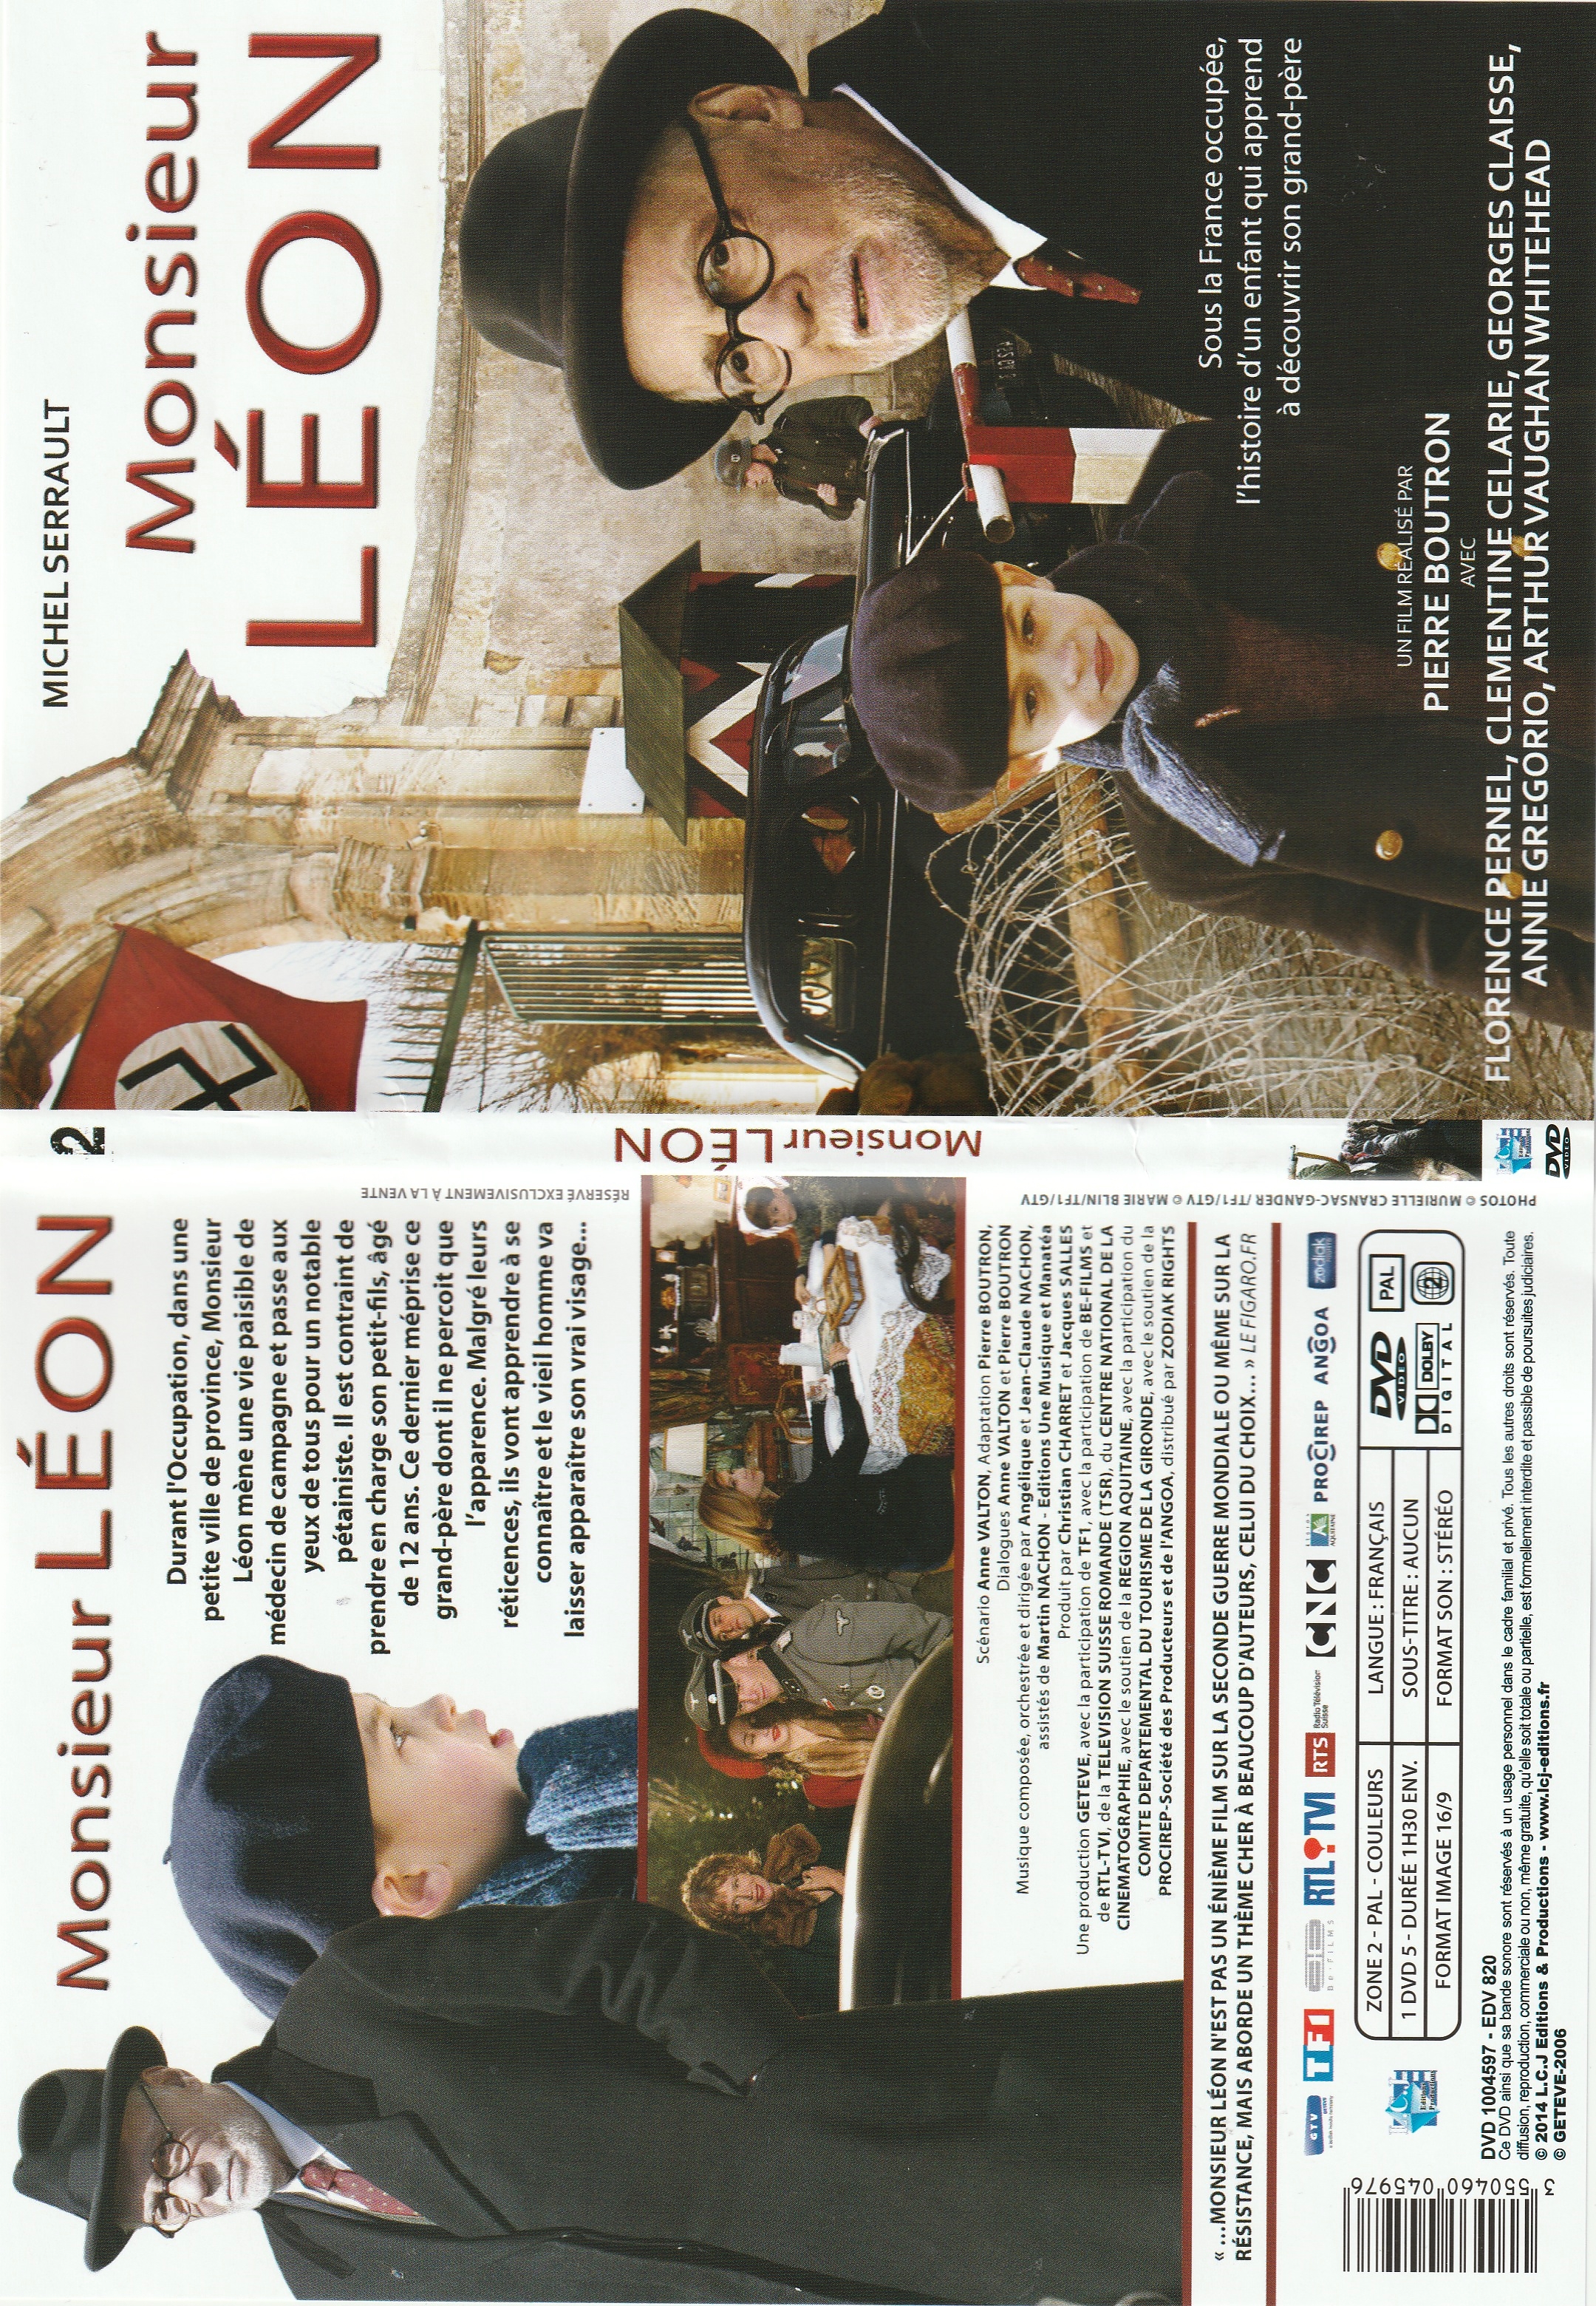 Jaquette DVD Monsieur Leon v2